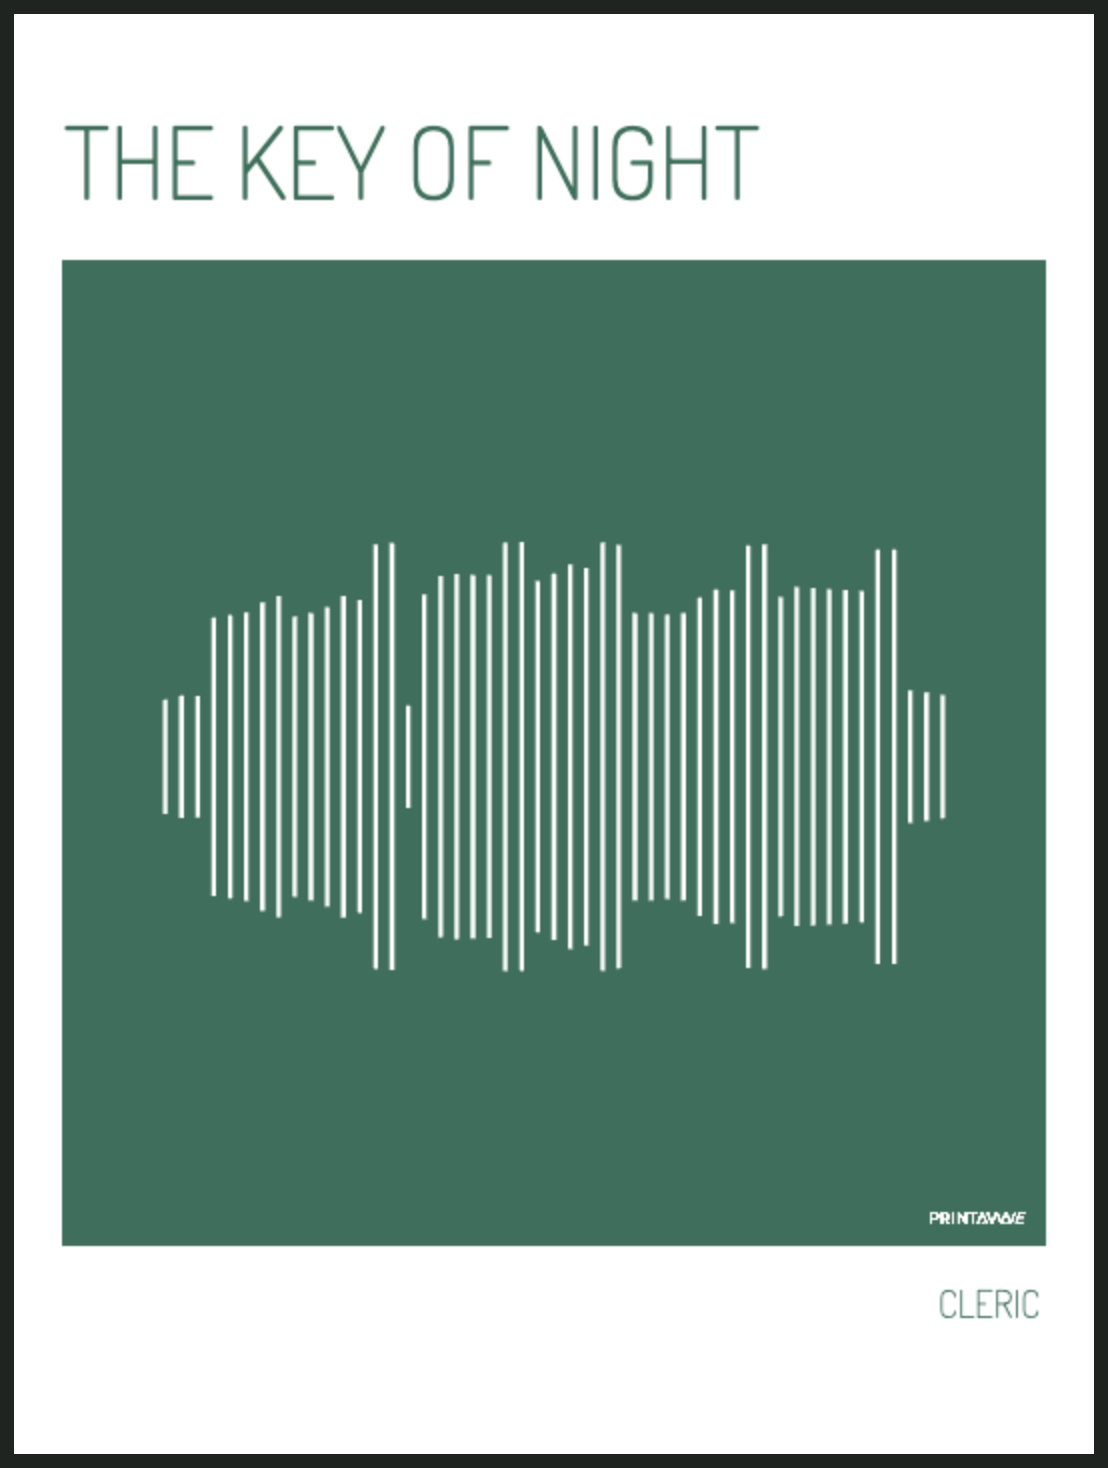 CLERIC - THE KEY OF NIGHT Printawave Unique Design #1688636983563